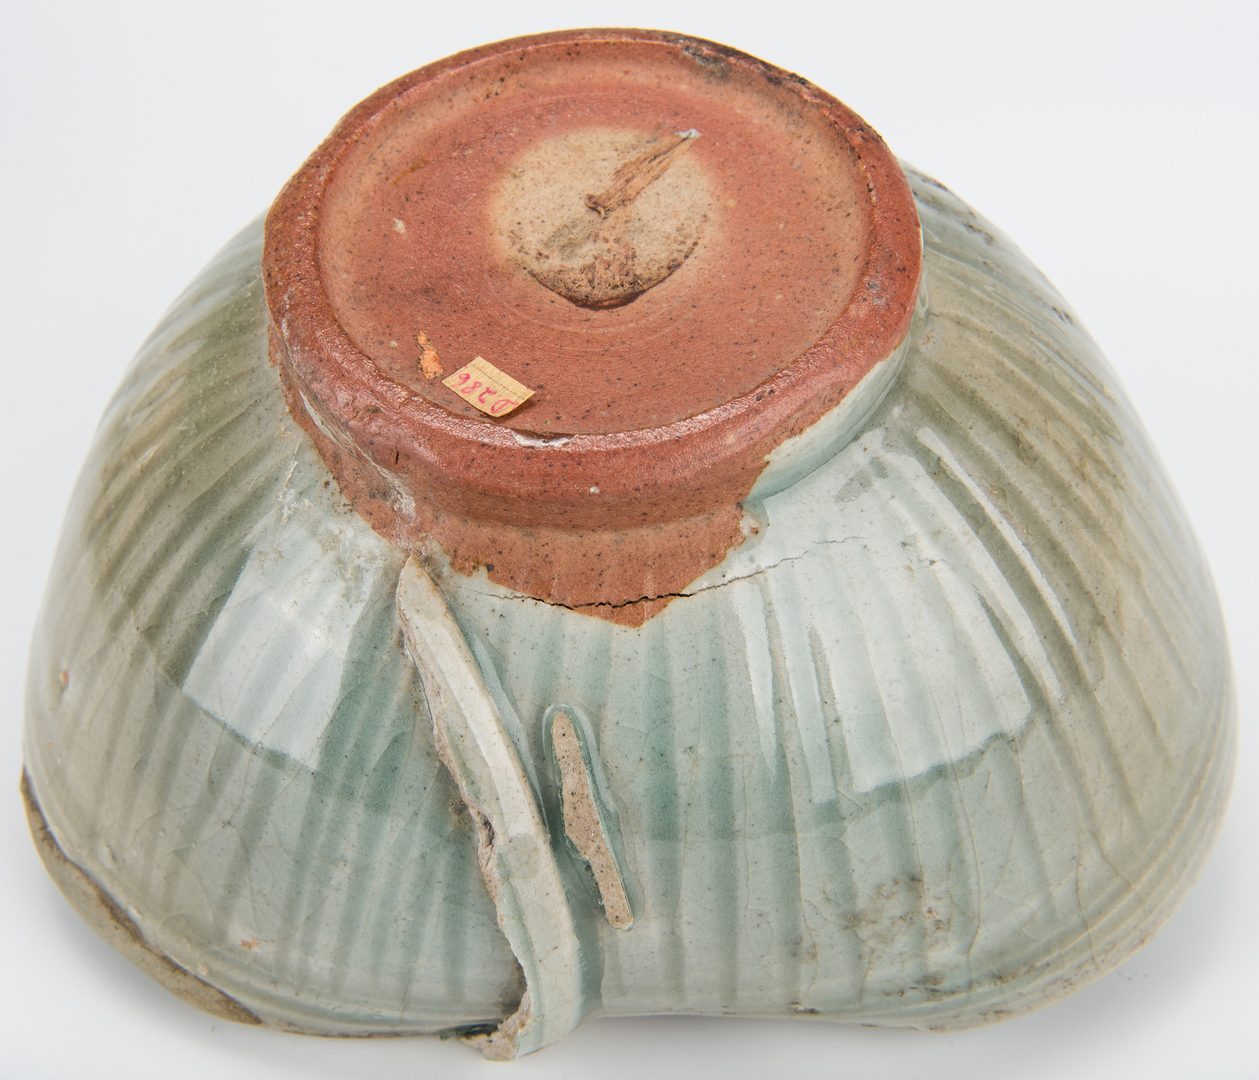 Lot 410: 2 Asian Celadon Glazed Bowls